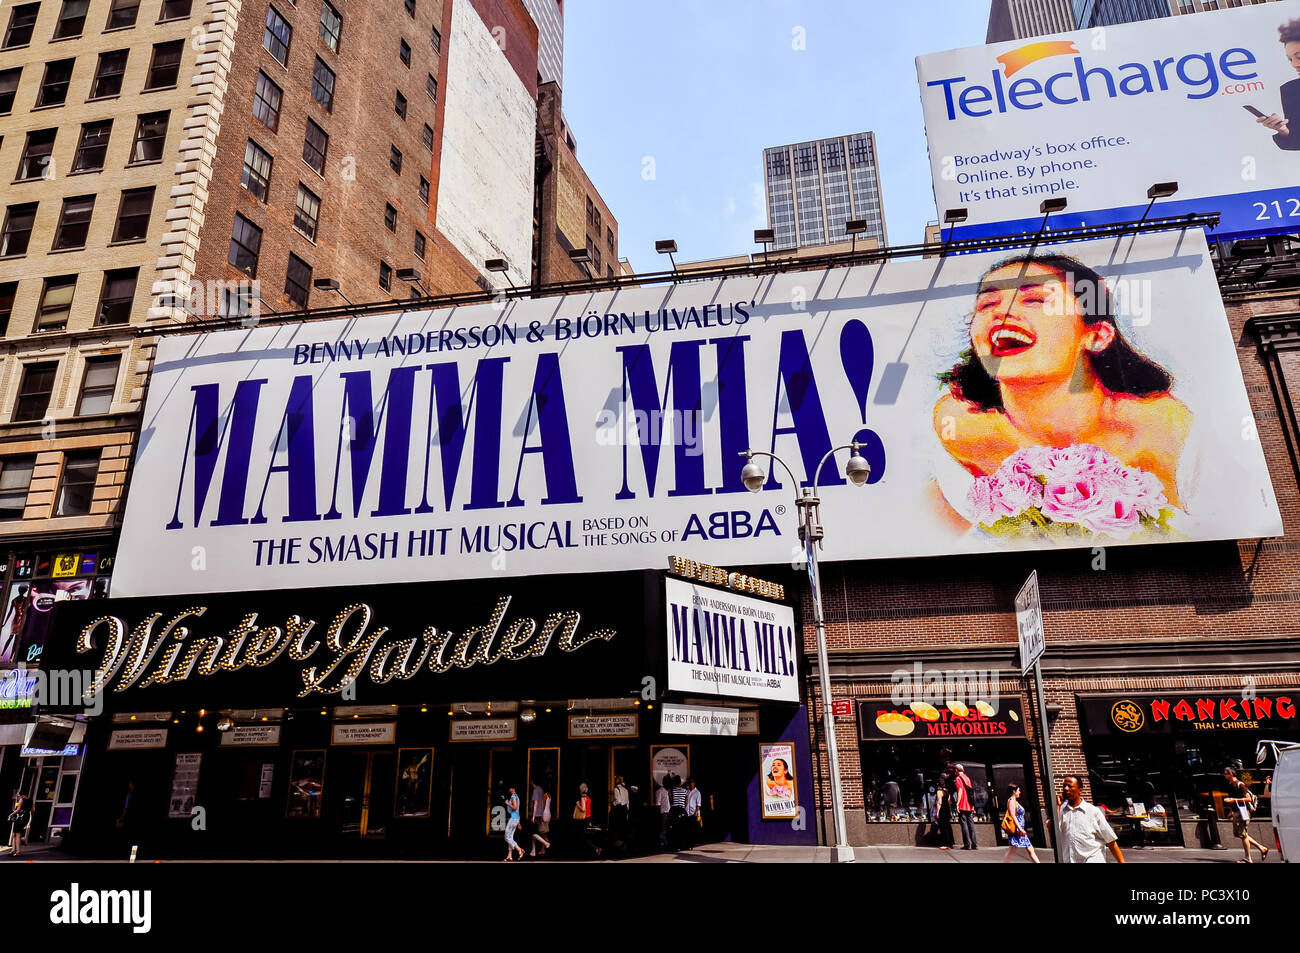 New York, New York/USA - 9 juin 2011 : panneau d'affichage géant de MAMMA MMIA !, Manhattan, New York, NY. Banque D'Images